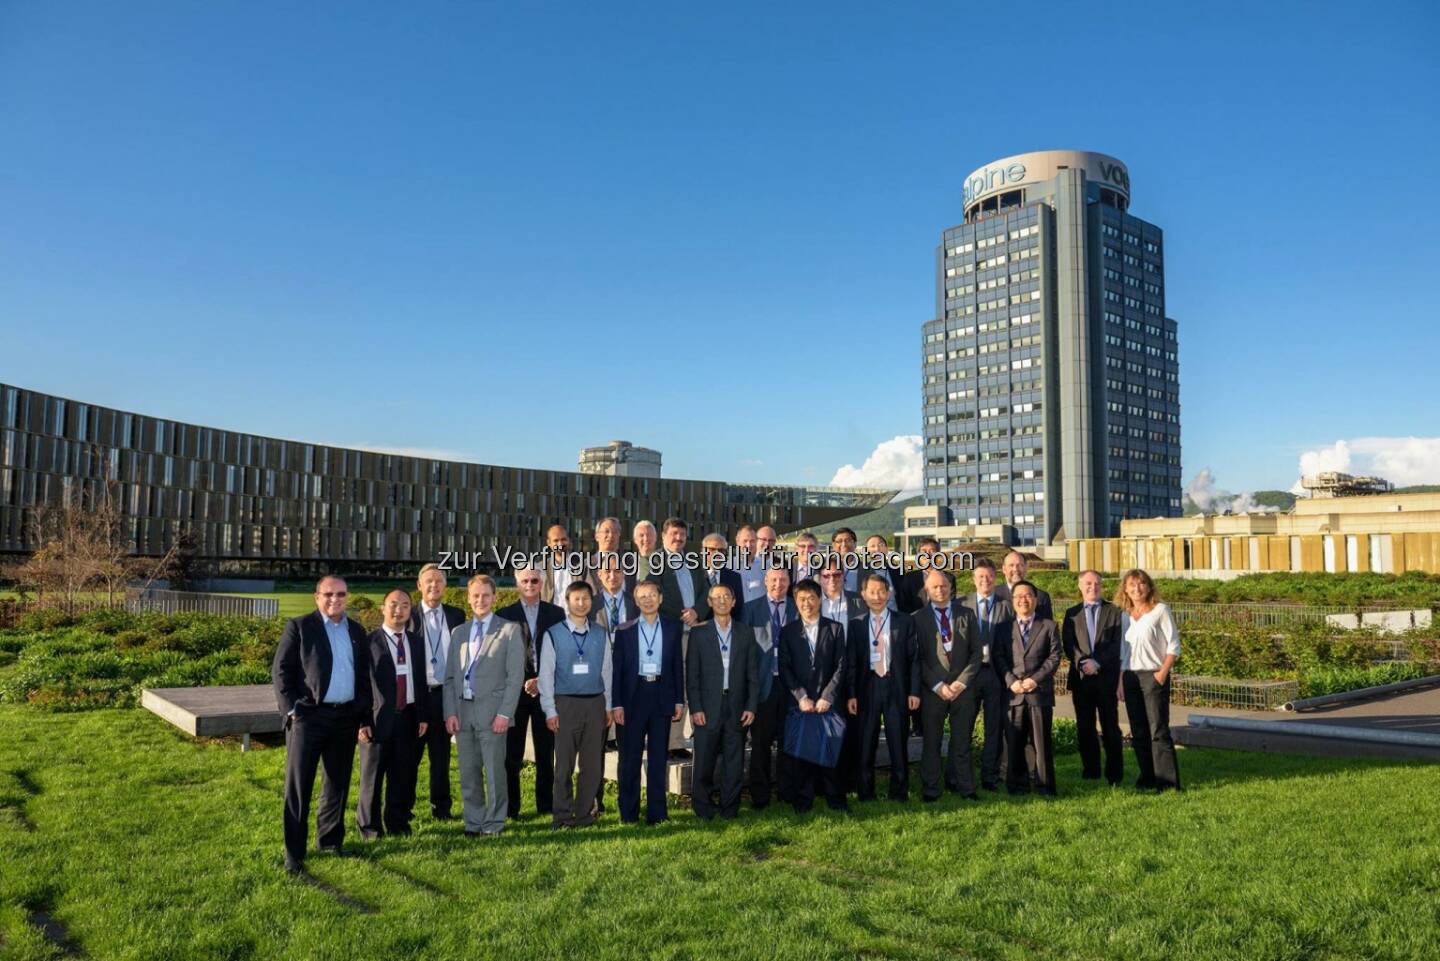 voestalpine: TECO, the World Steel Association's (worldsteel) Technology Committee, met in Linz from April 26 to 29: http://bit.ly/1IfuILZ  Source: http://facebook.com/voestalpine